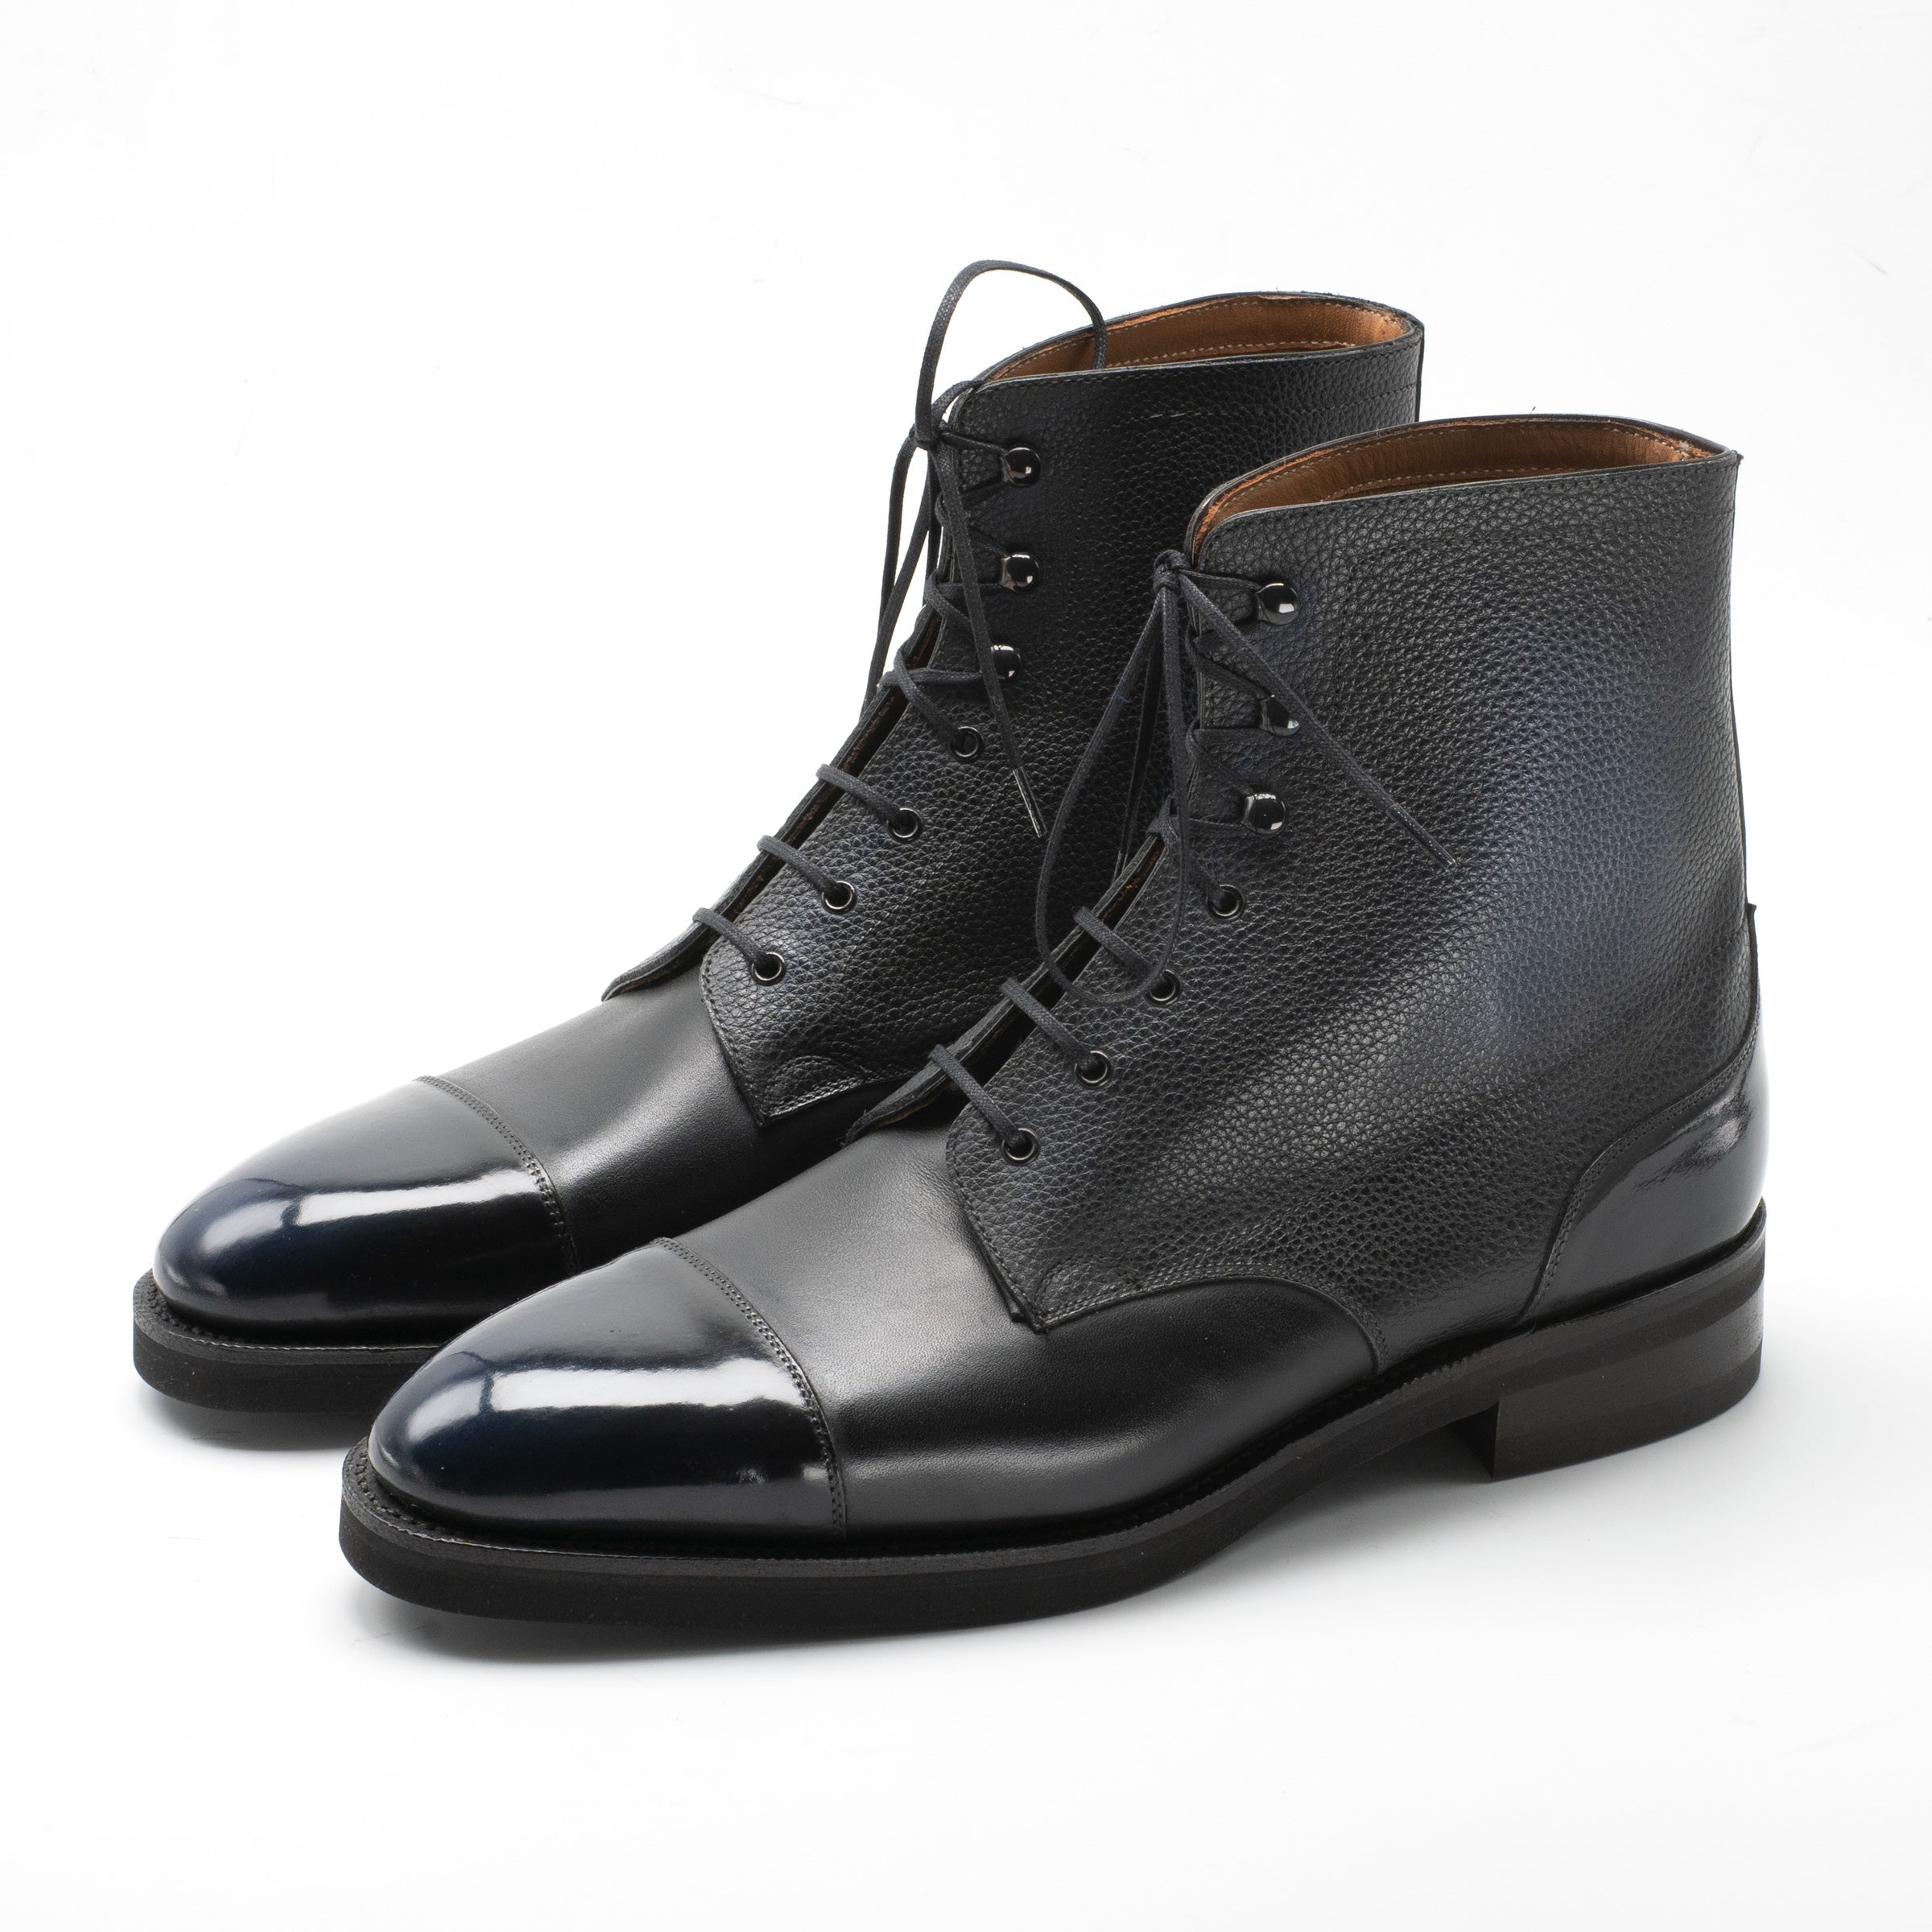 Hemingway Men's Derby Boots by Norman Vilalta Bespoke Shoemakers of Barcelona, Spain